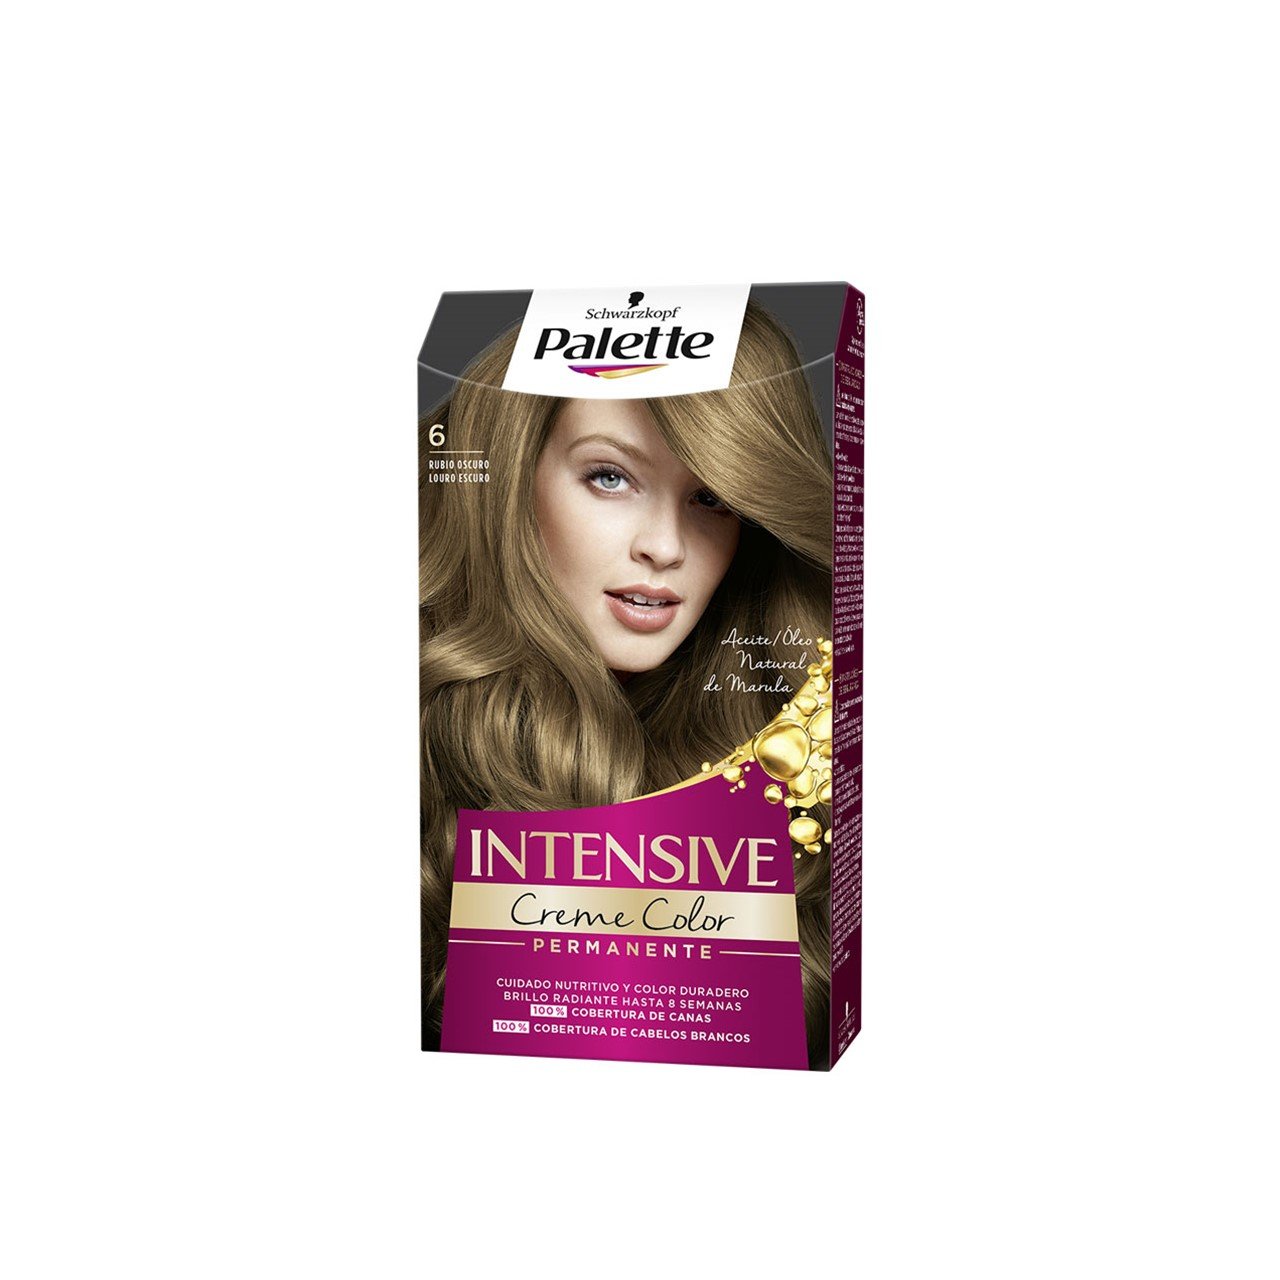 Schwarzkopf Palette Intensive Creme Color Permanent Hair Dye 6 Dark Blonde